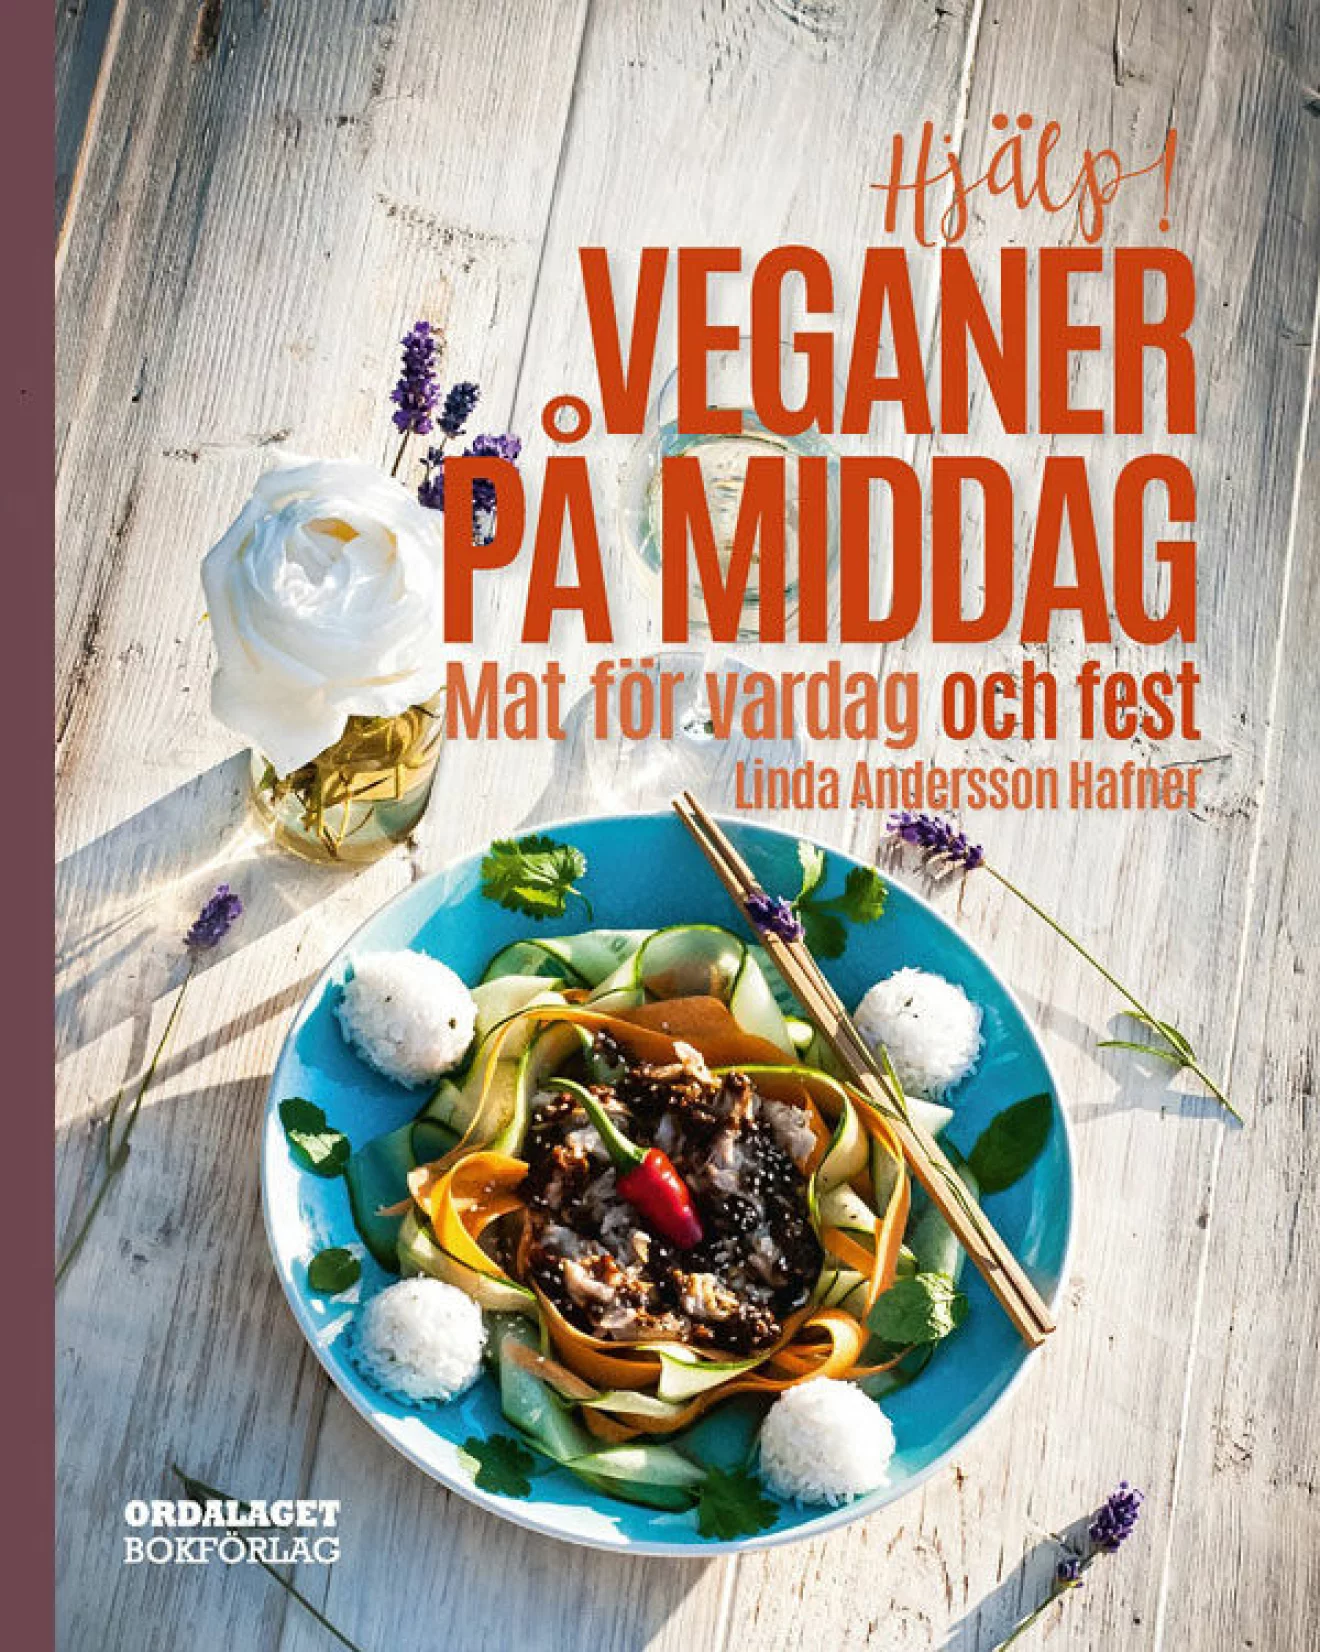 Hjälp! Veganer på middag av Linda Andersson Hafner